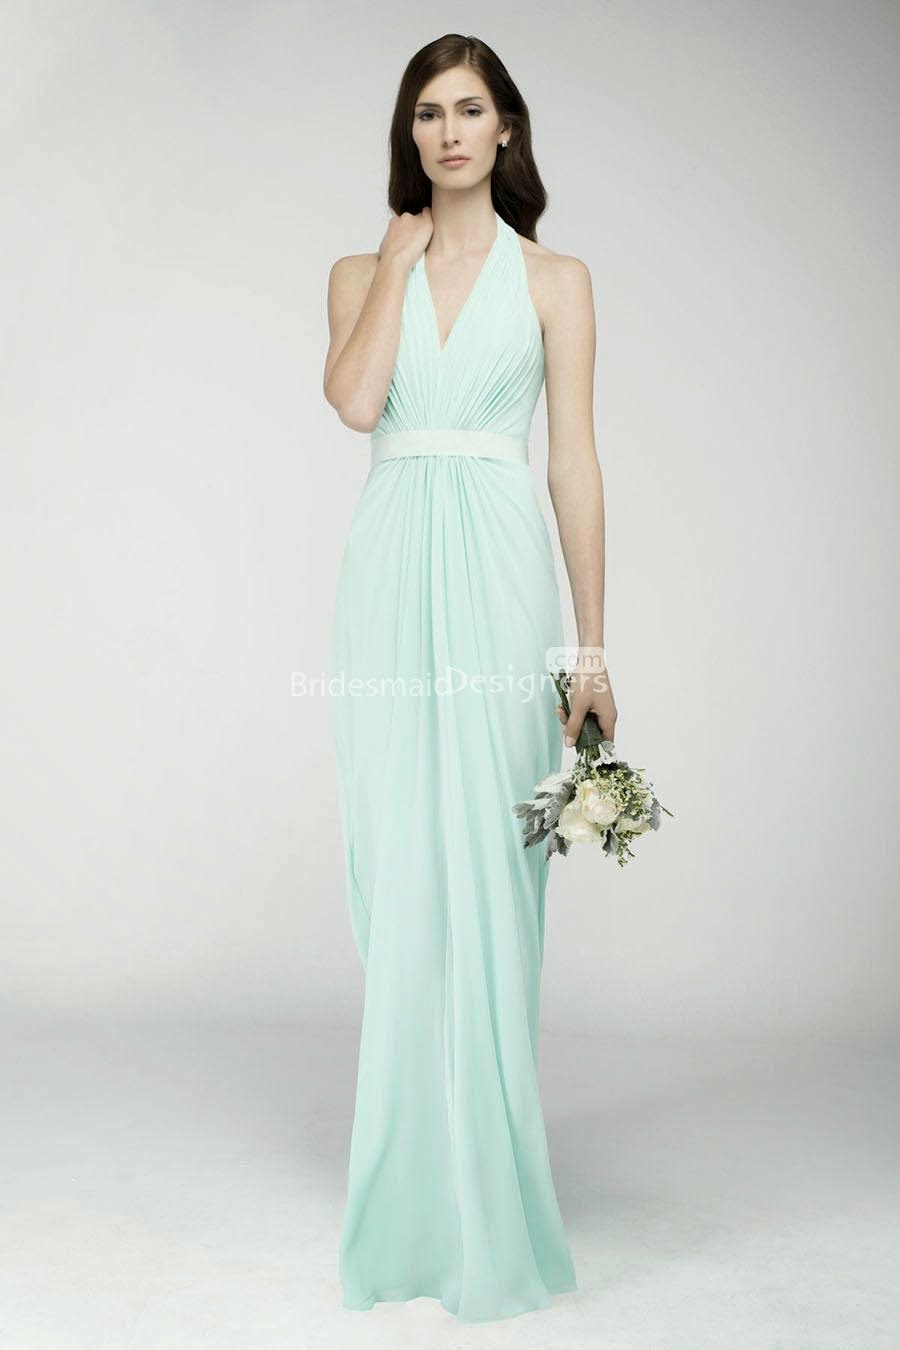 http://www.bridesmaiddesigners.com/beautiful-halter-v-neck-and-low-back-long-chiffon-bridesmaid-dress-1022.html